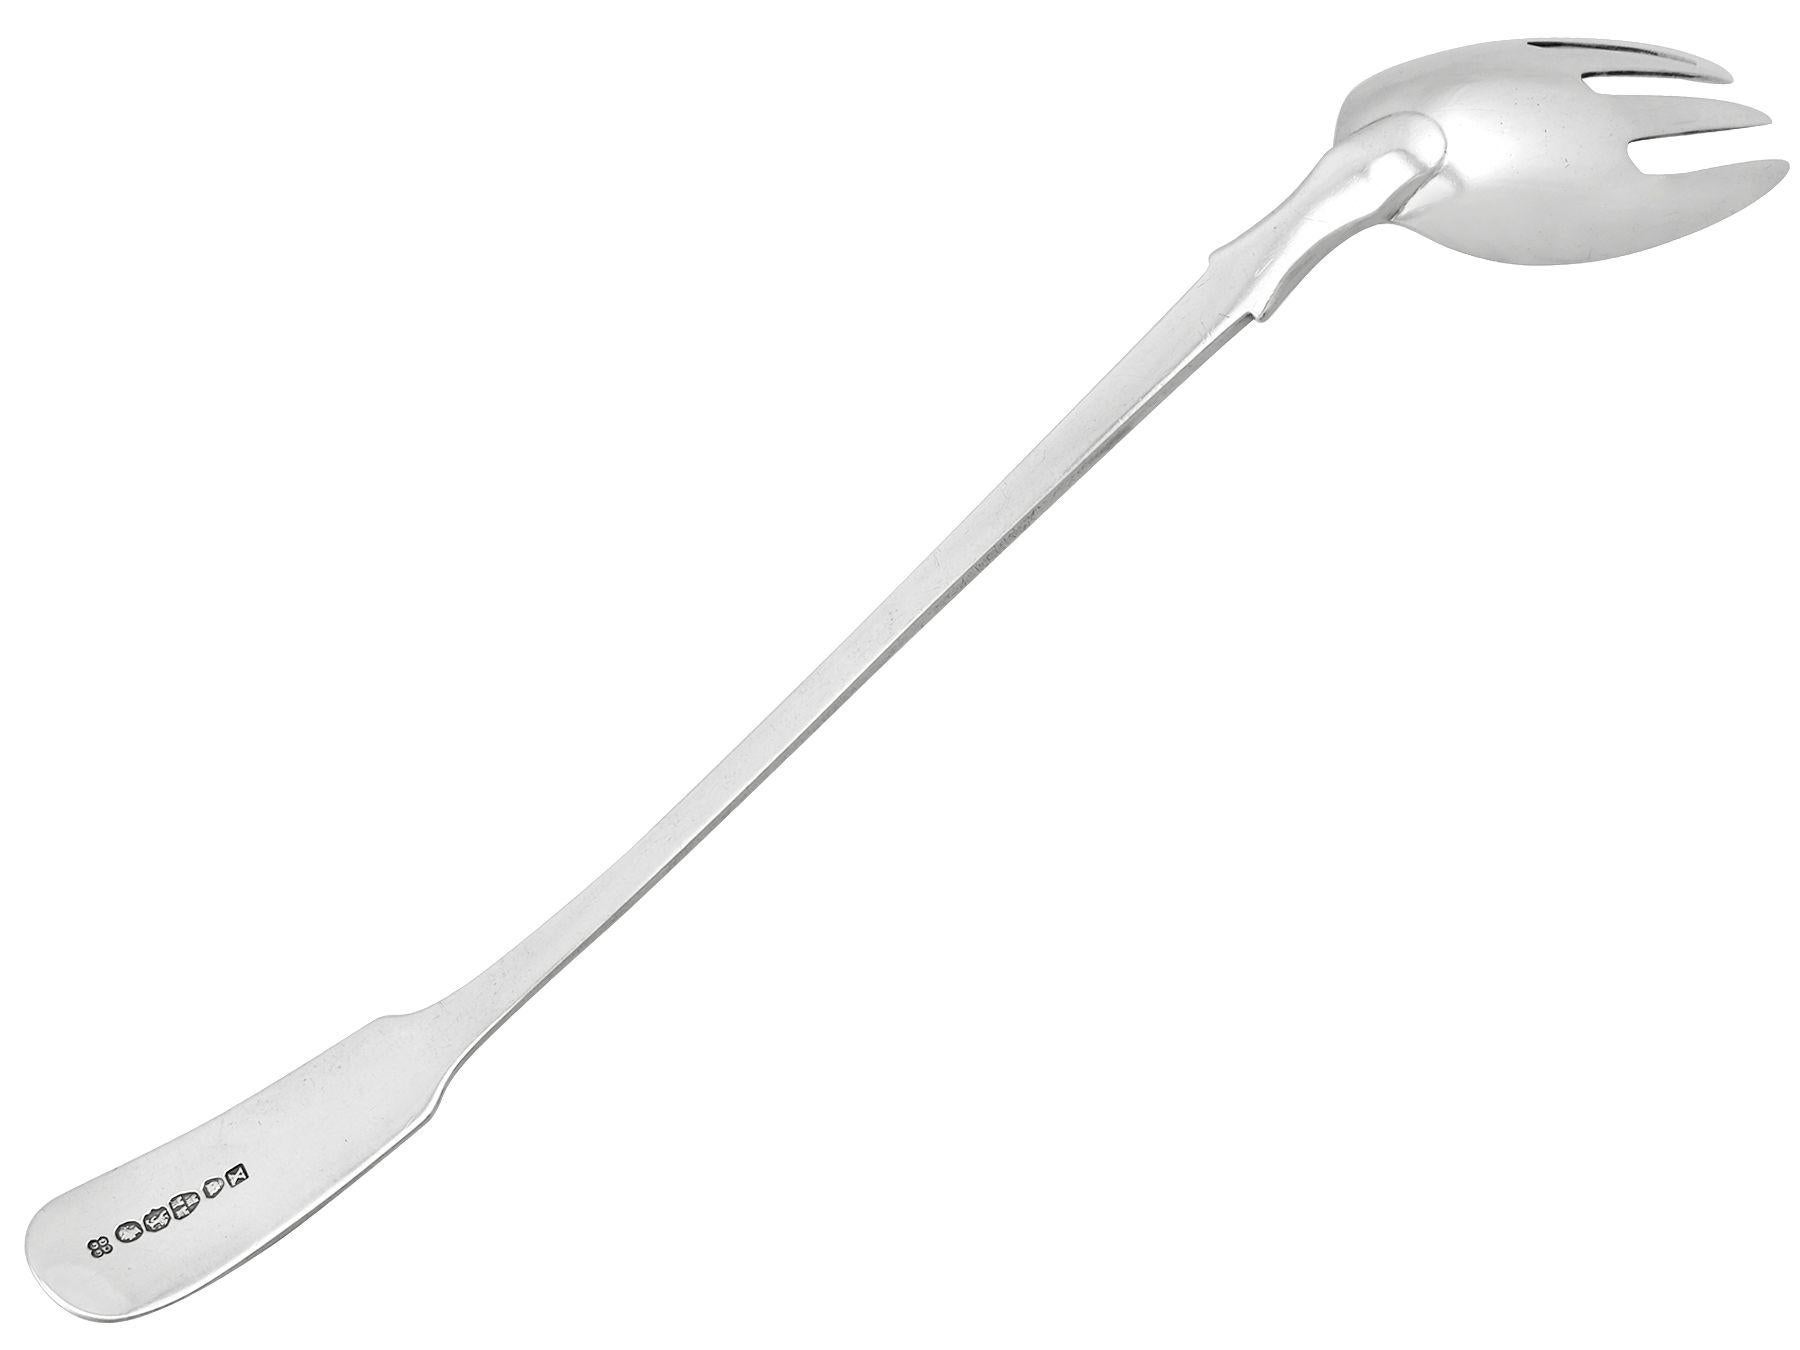 runcible spoon for sale